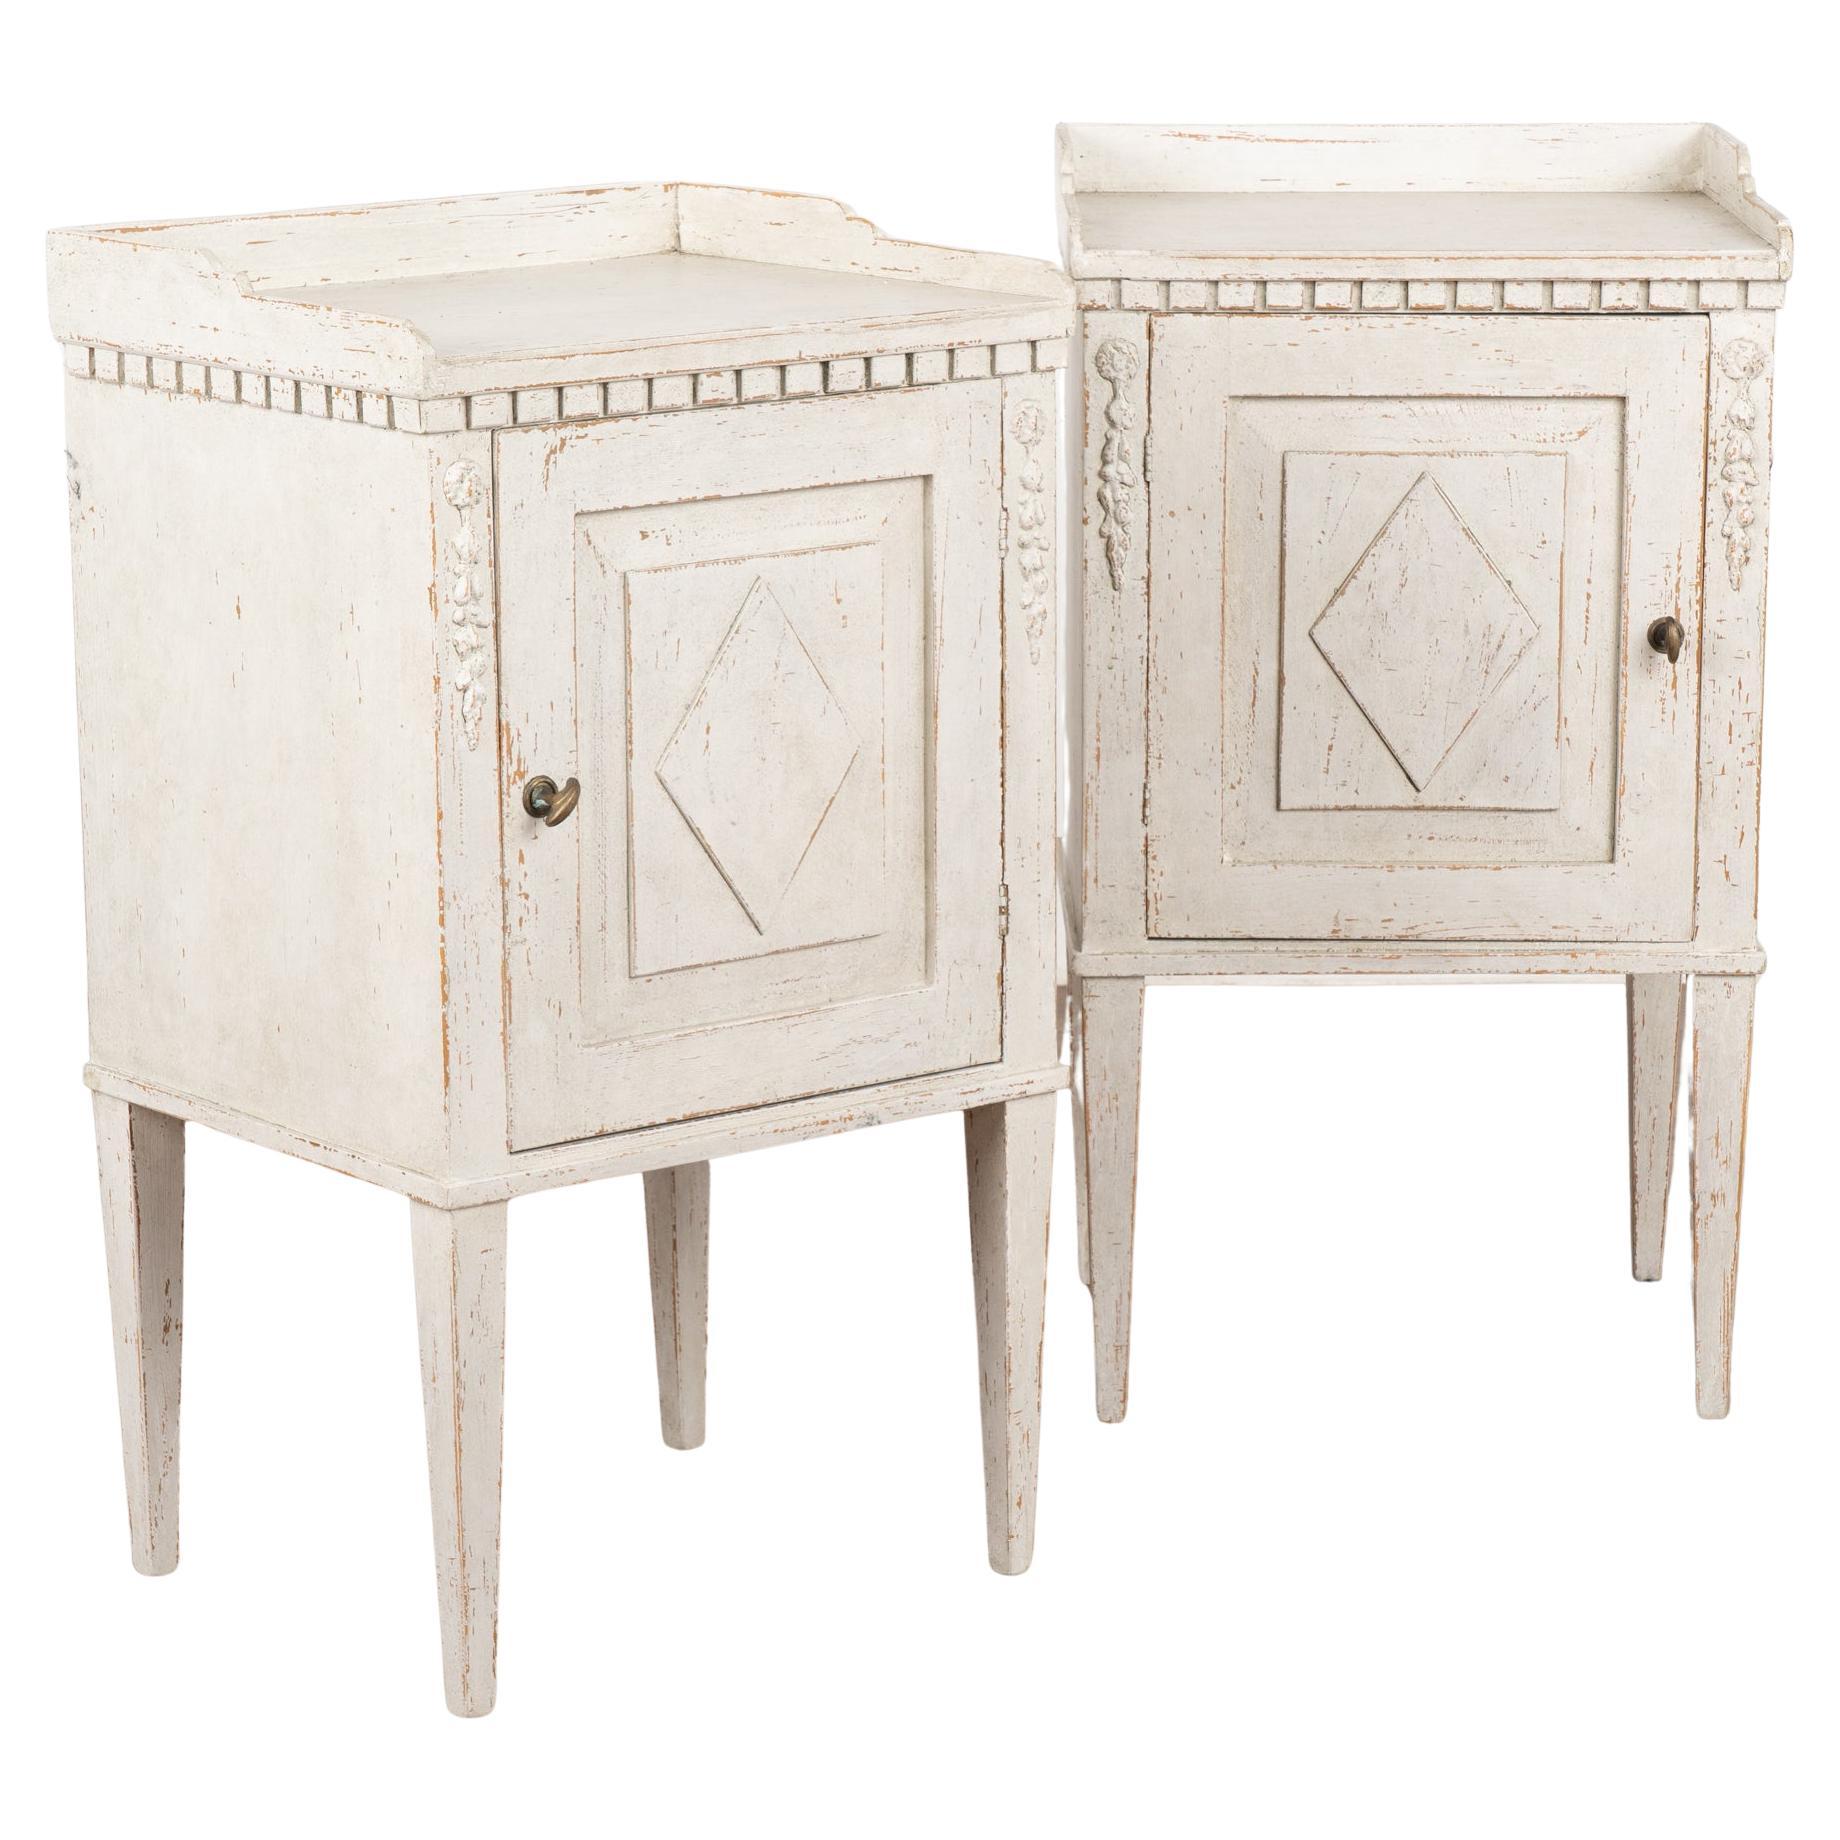 Pair of Small White Swedish Cabinets Nightstands, circa 1860-80